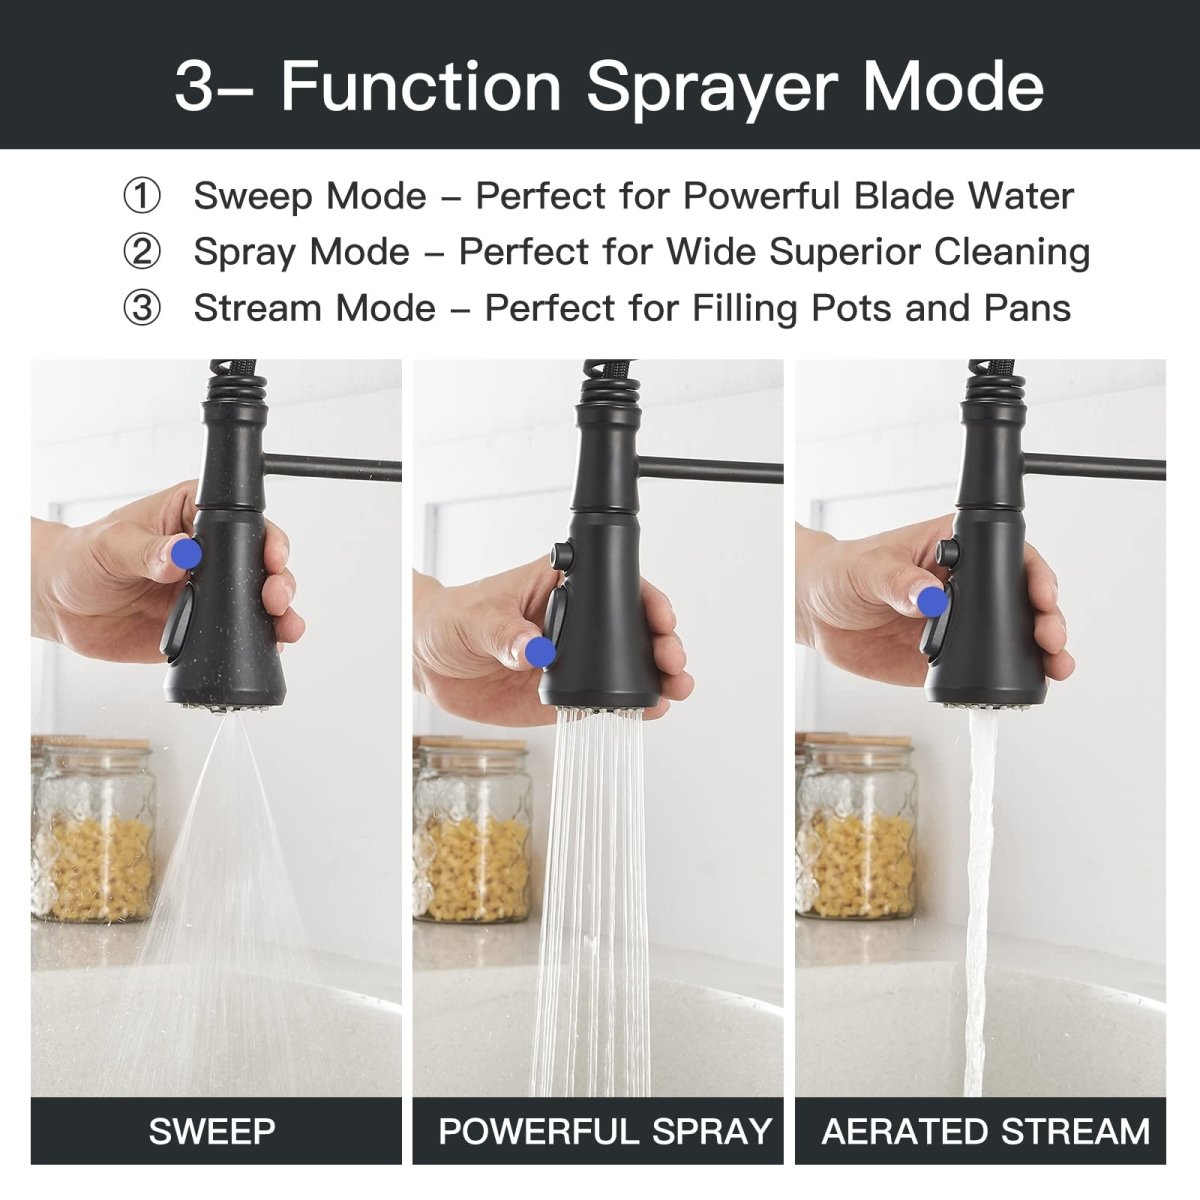 Single-Hole Sprayer 3 Spray Kitchen Faucet Black - buyfaucet.com